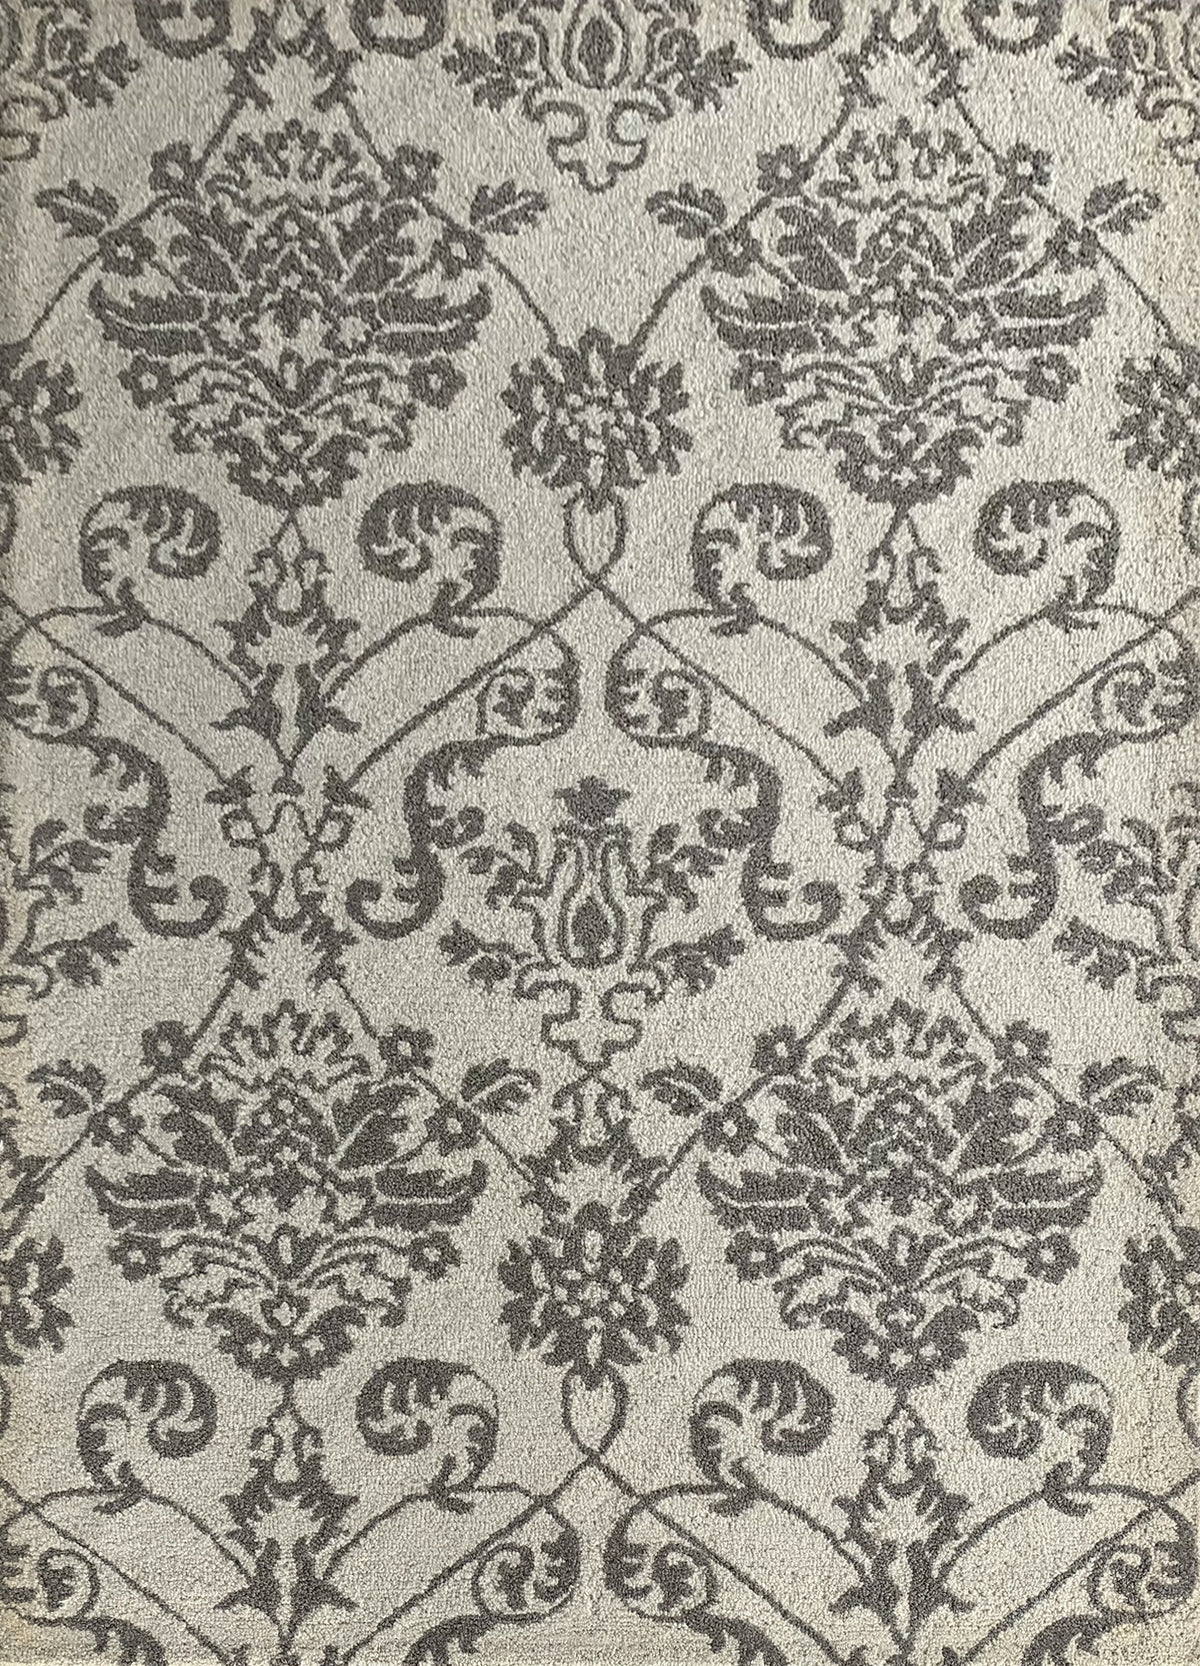 Rugslane White & Grey Color Traditional Design 100% New Zealand Wool Handmade Floral Carpet 5.3ft x 7.7ft